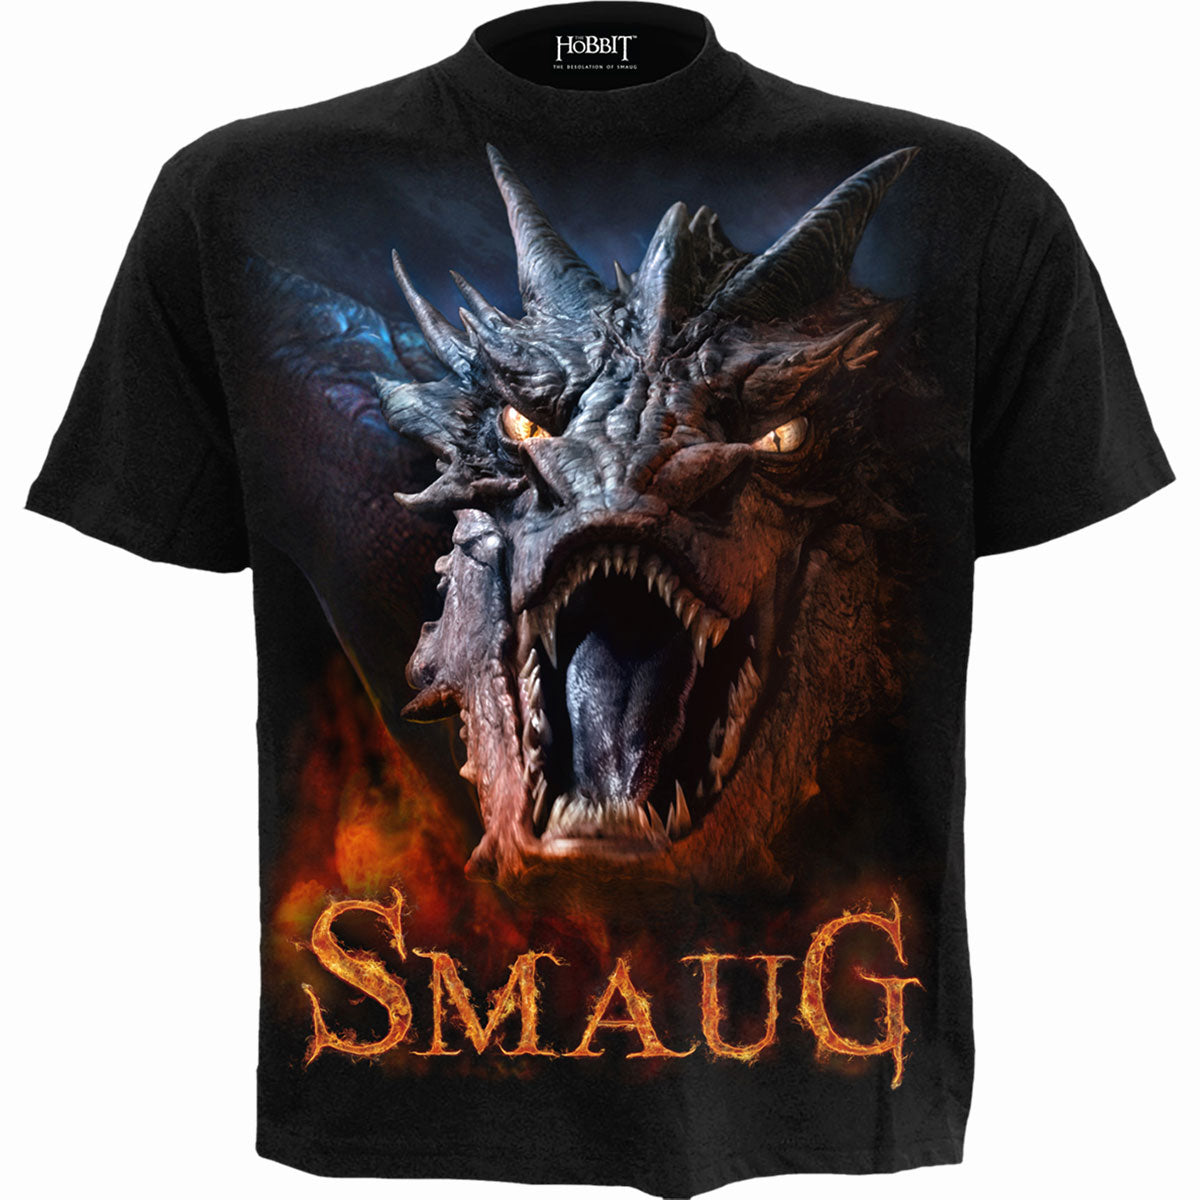 THE HOBBIT - SMAUG - T-Shirt Black